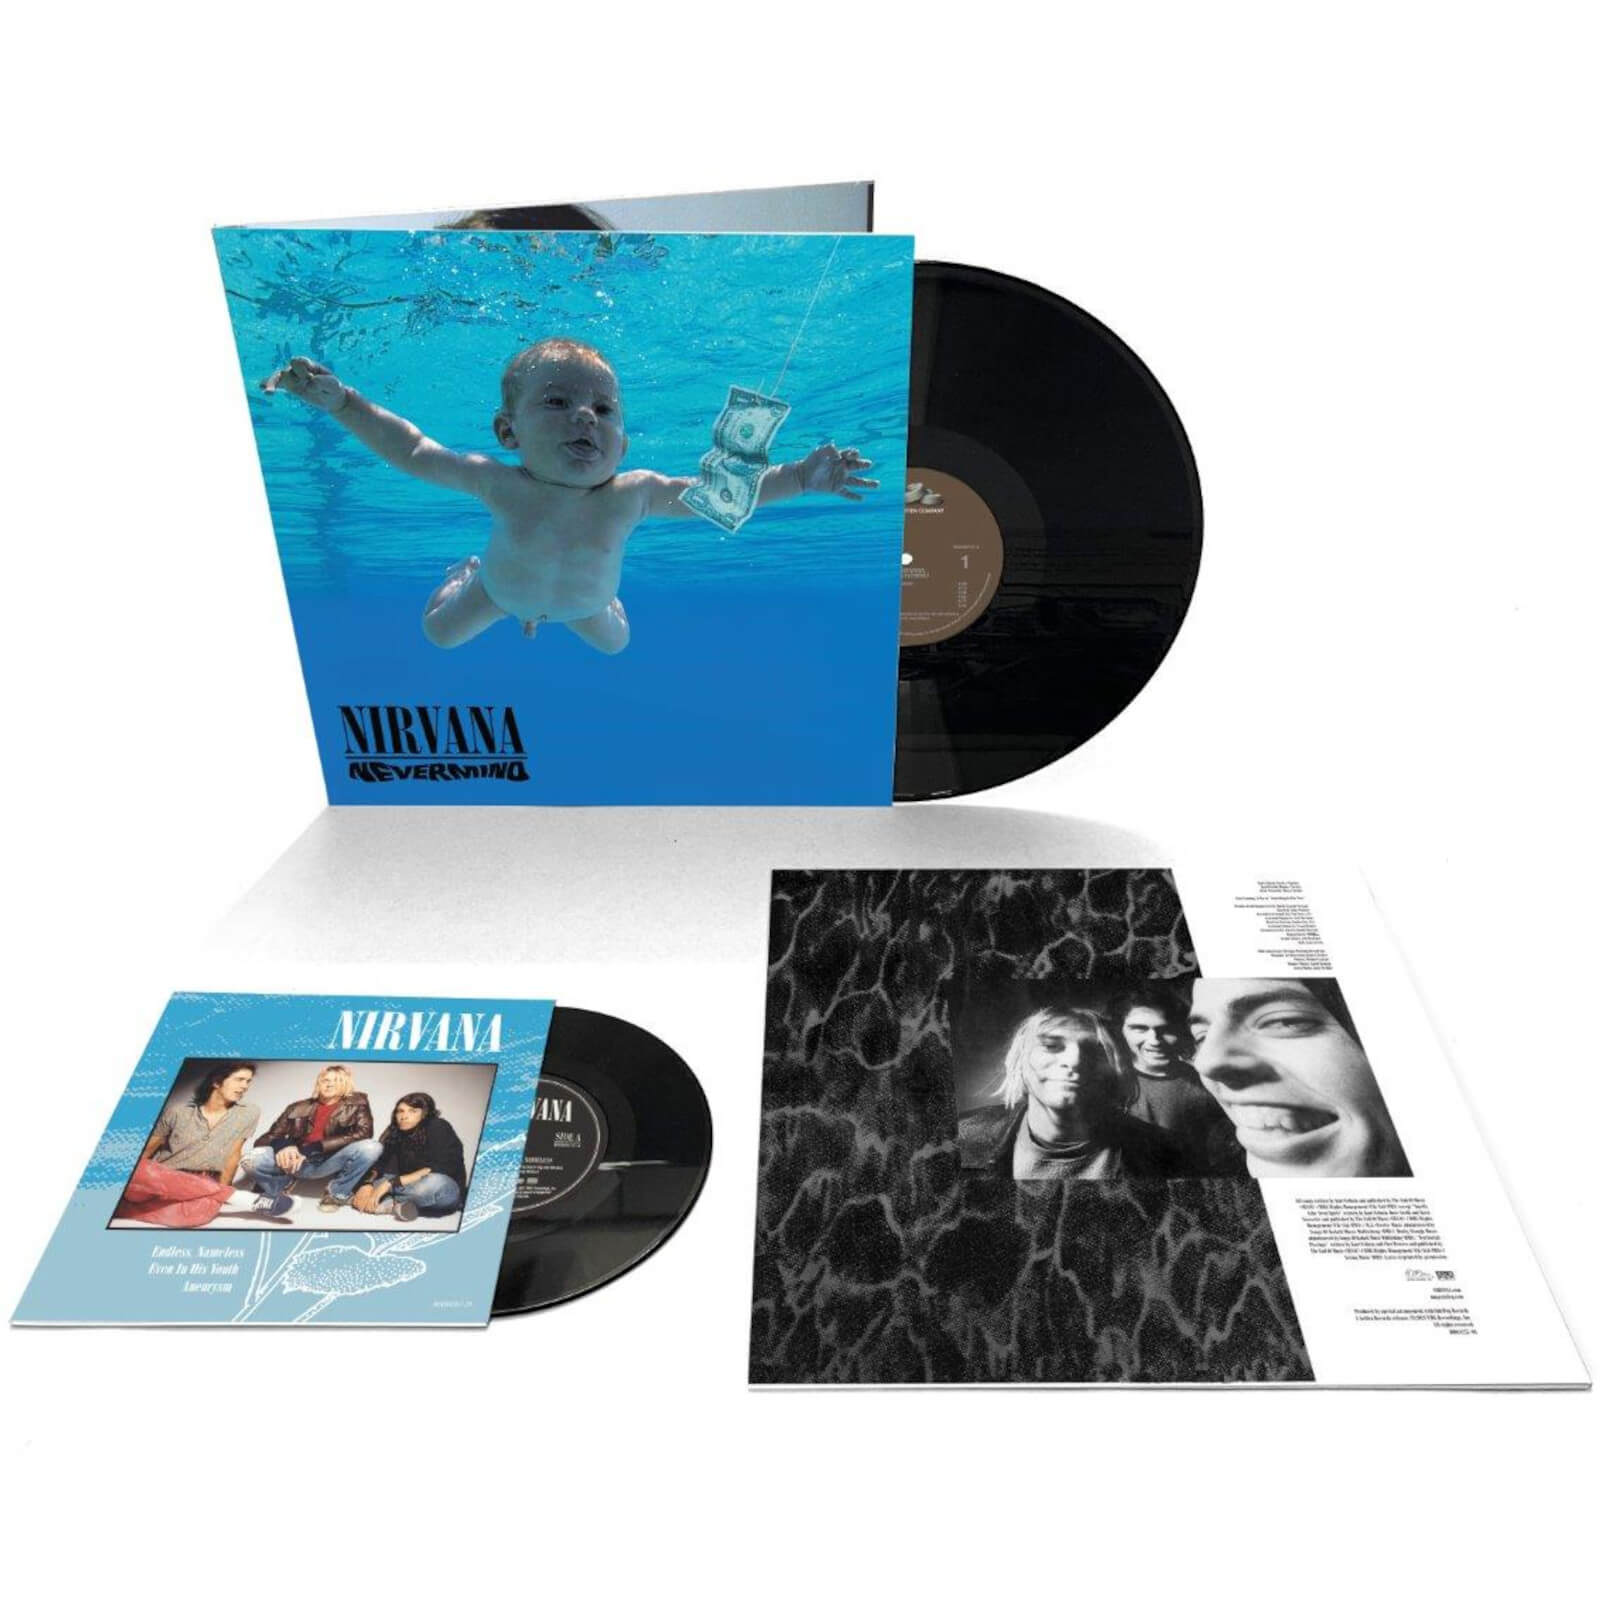 Nirvana - Nevermind 30th Anniversary Edition Vinyl + 7